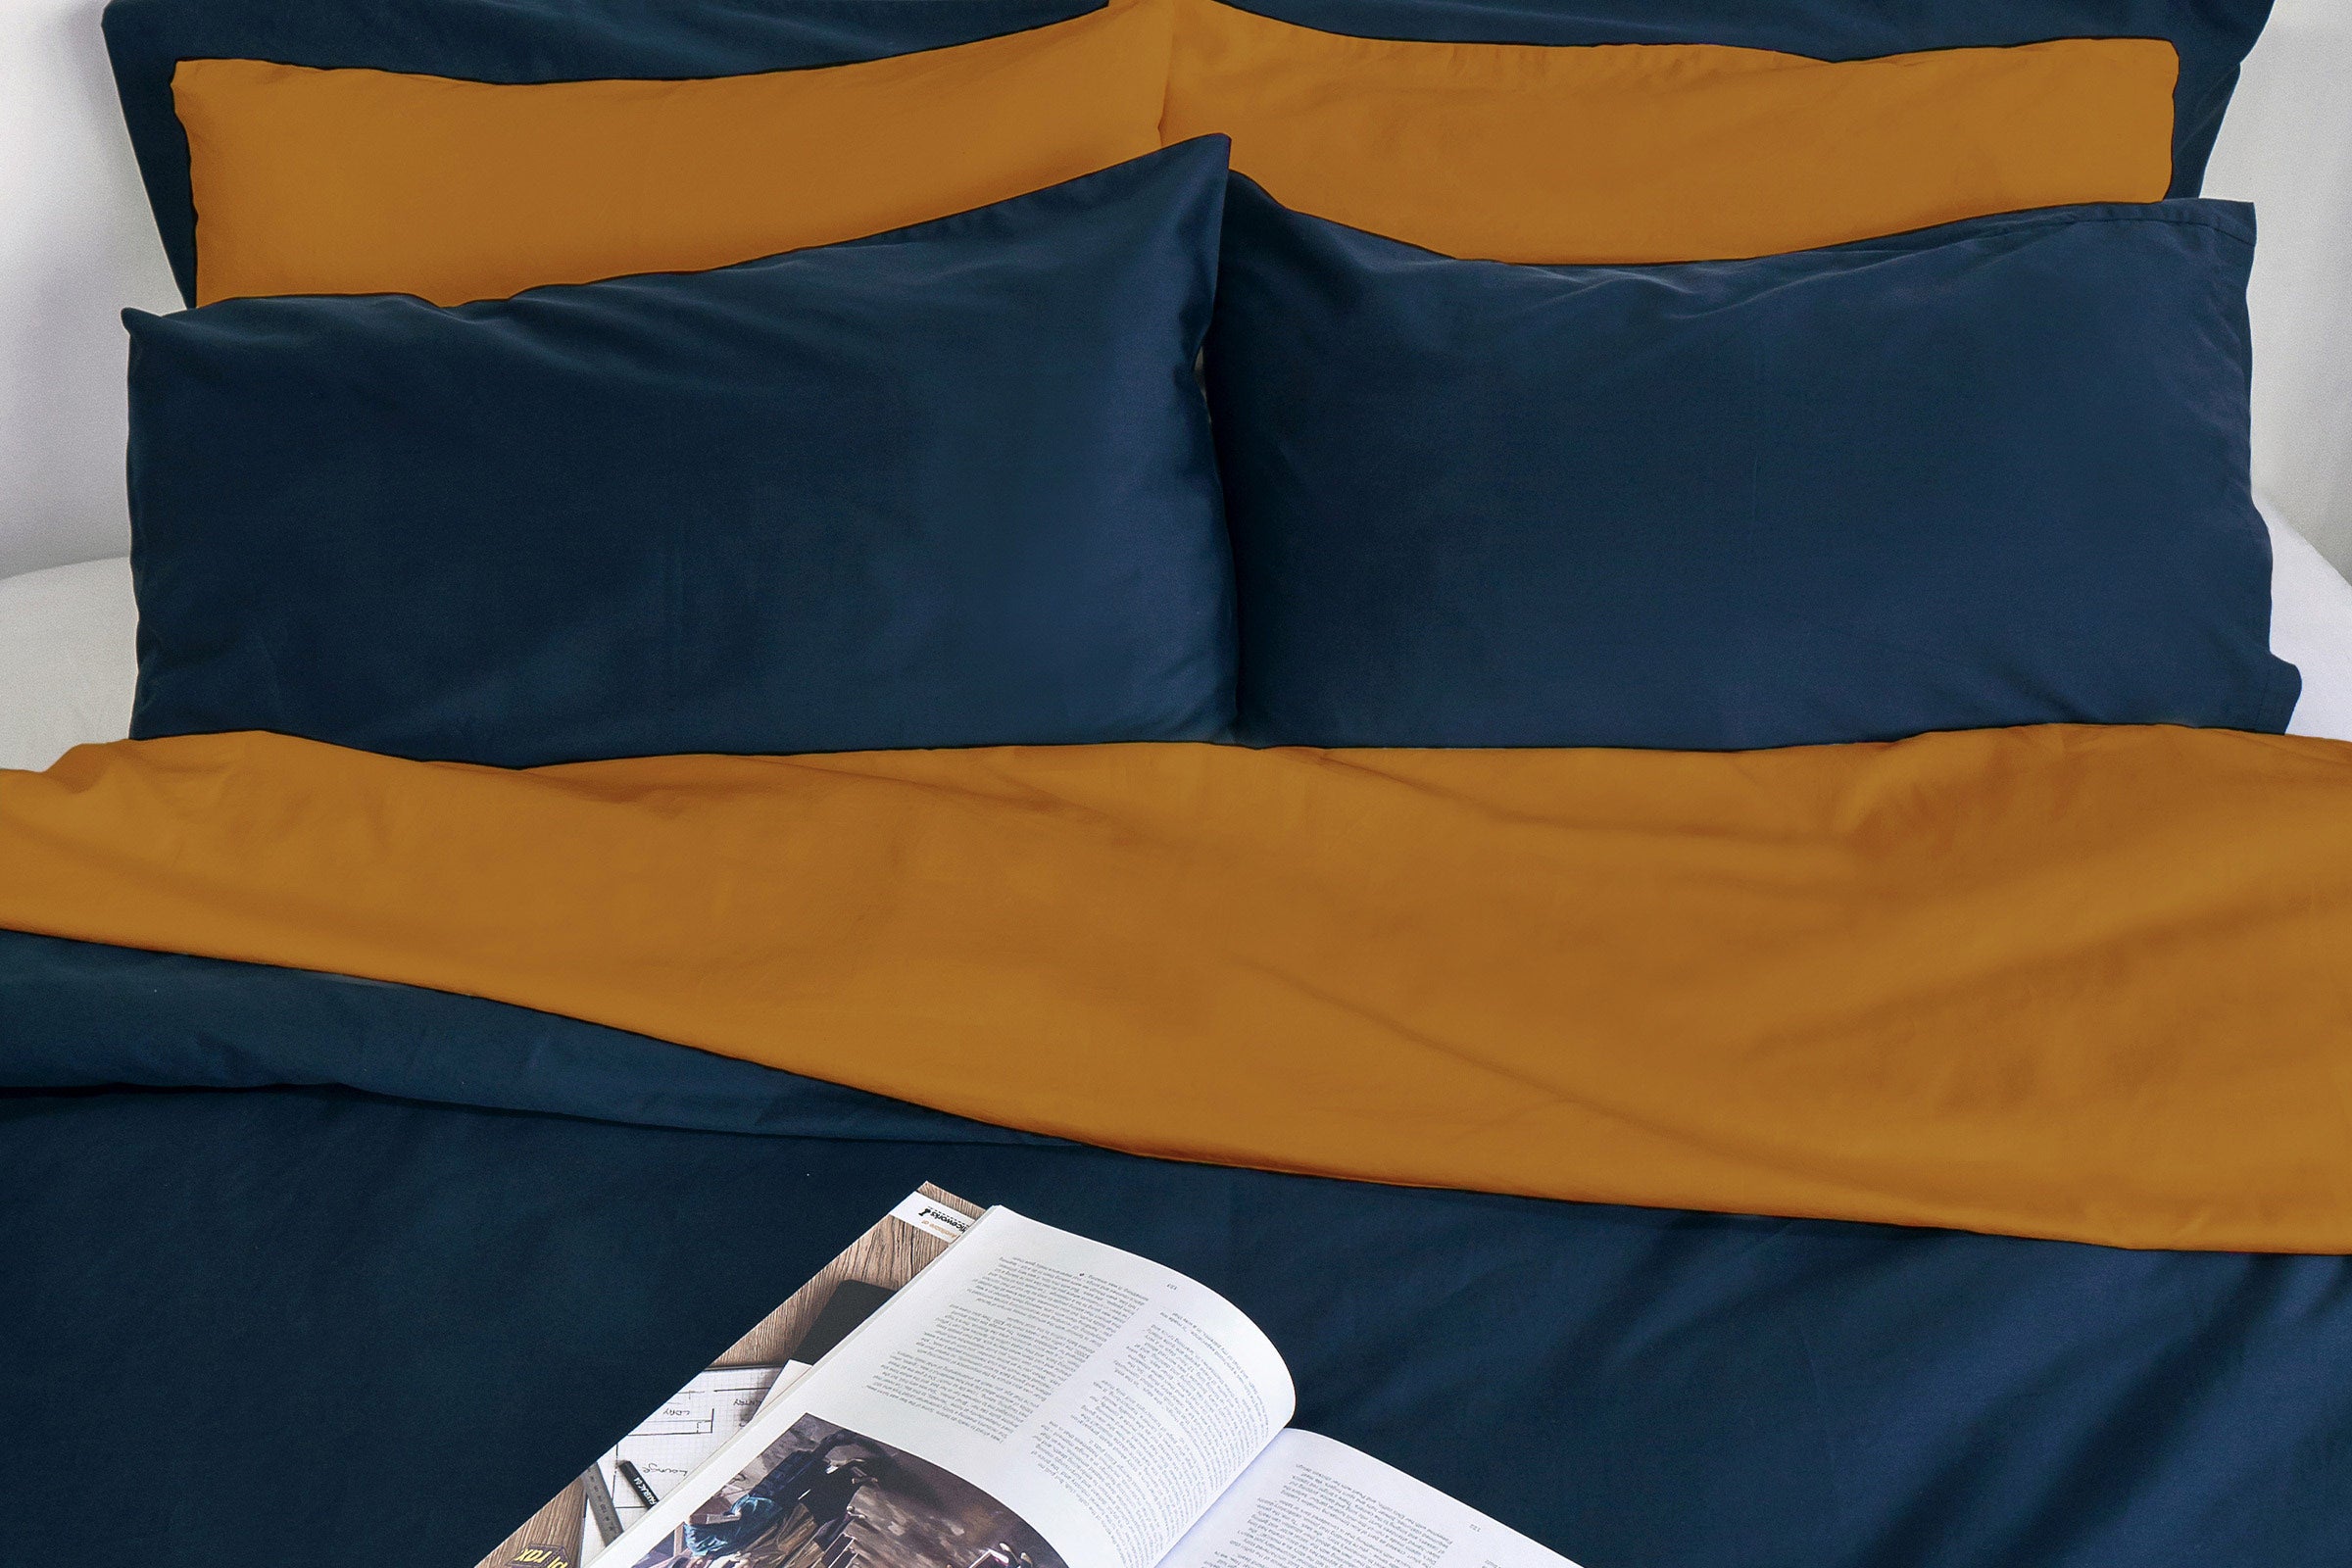 classic-navy-duvet-cover-body-pillow-pillowcase-pair-white-fitted-sheet-crisp-mustard-flat-sheet-pillowcase-pair-by-sojao.jpg